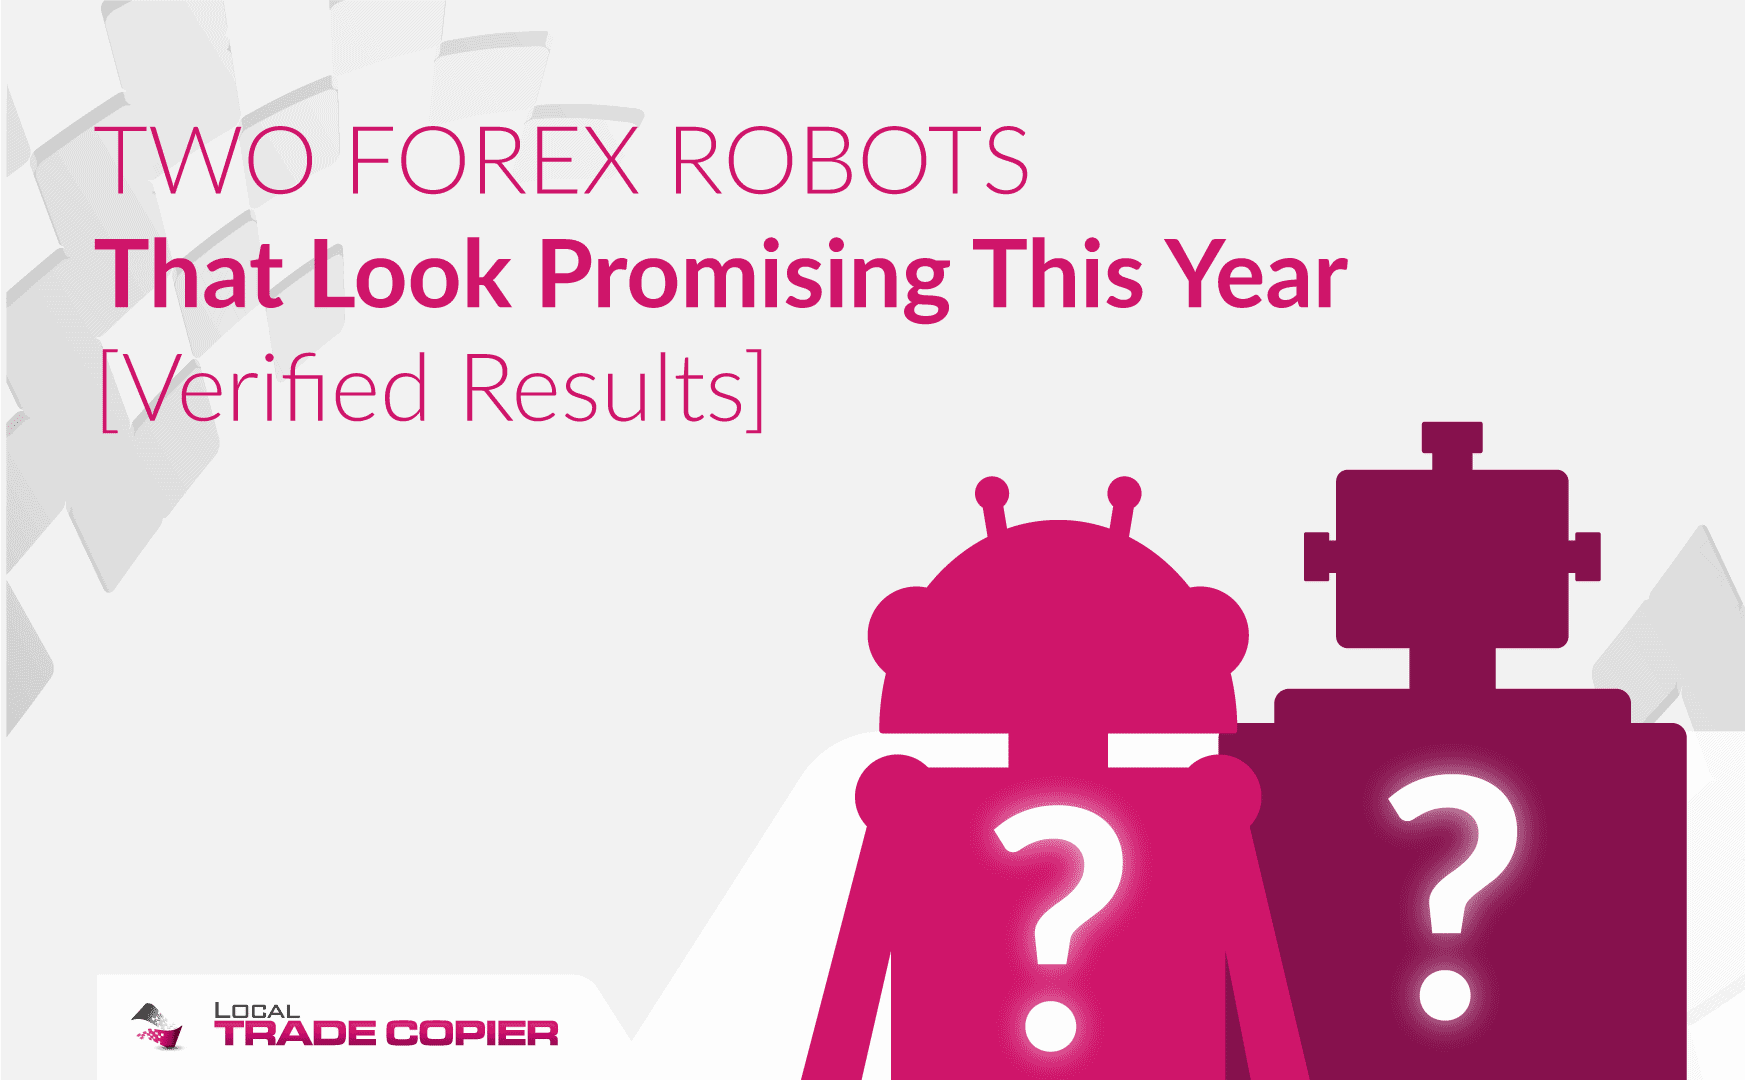 Forex robot tfot worldwide invest org romney vp betting tips